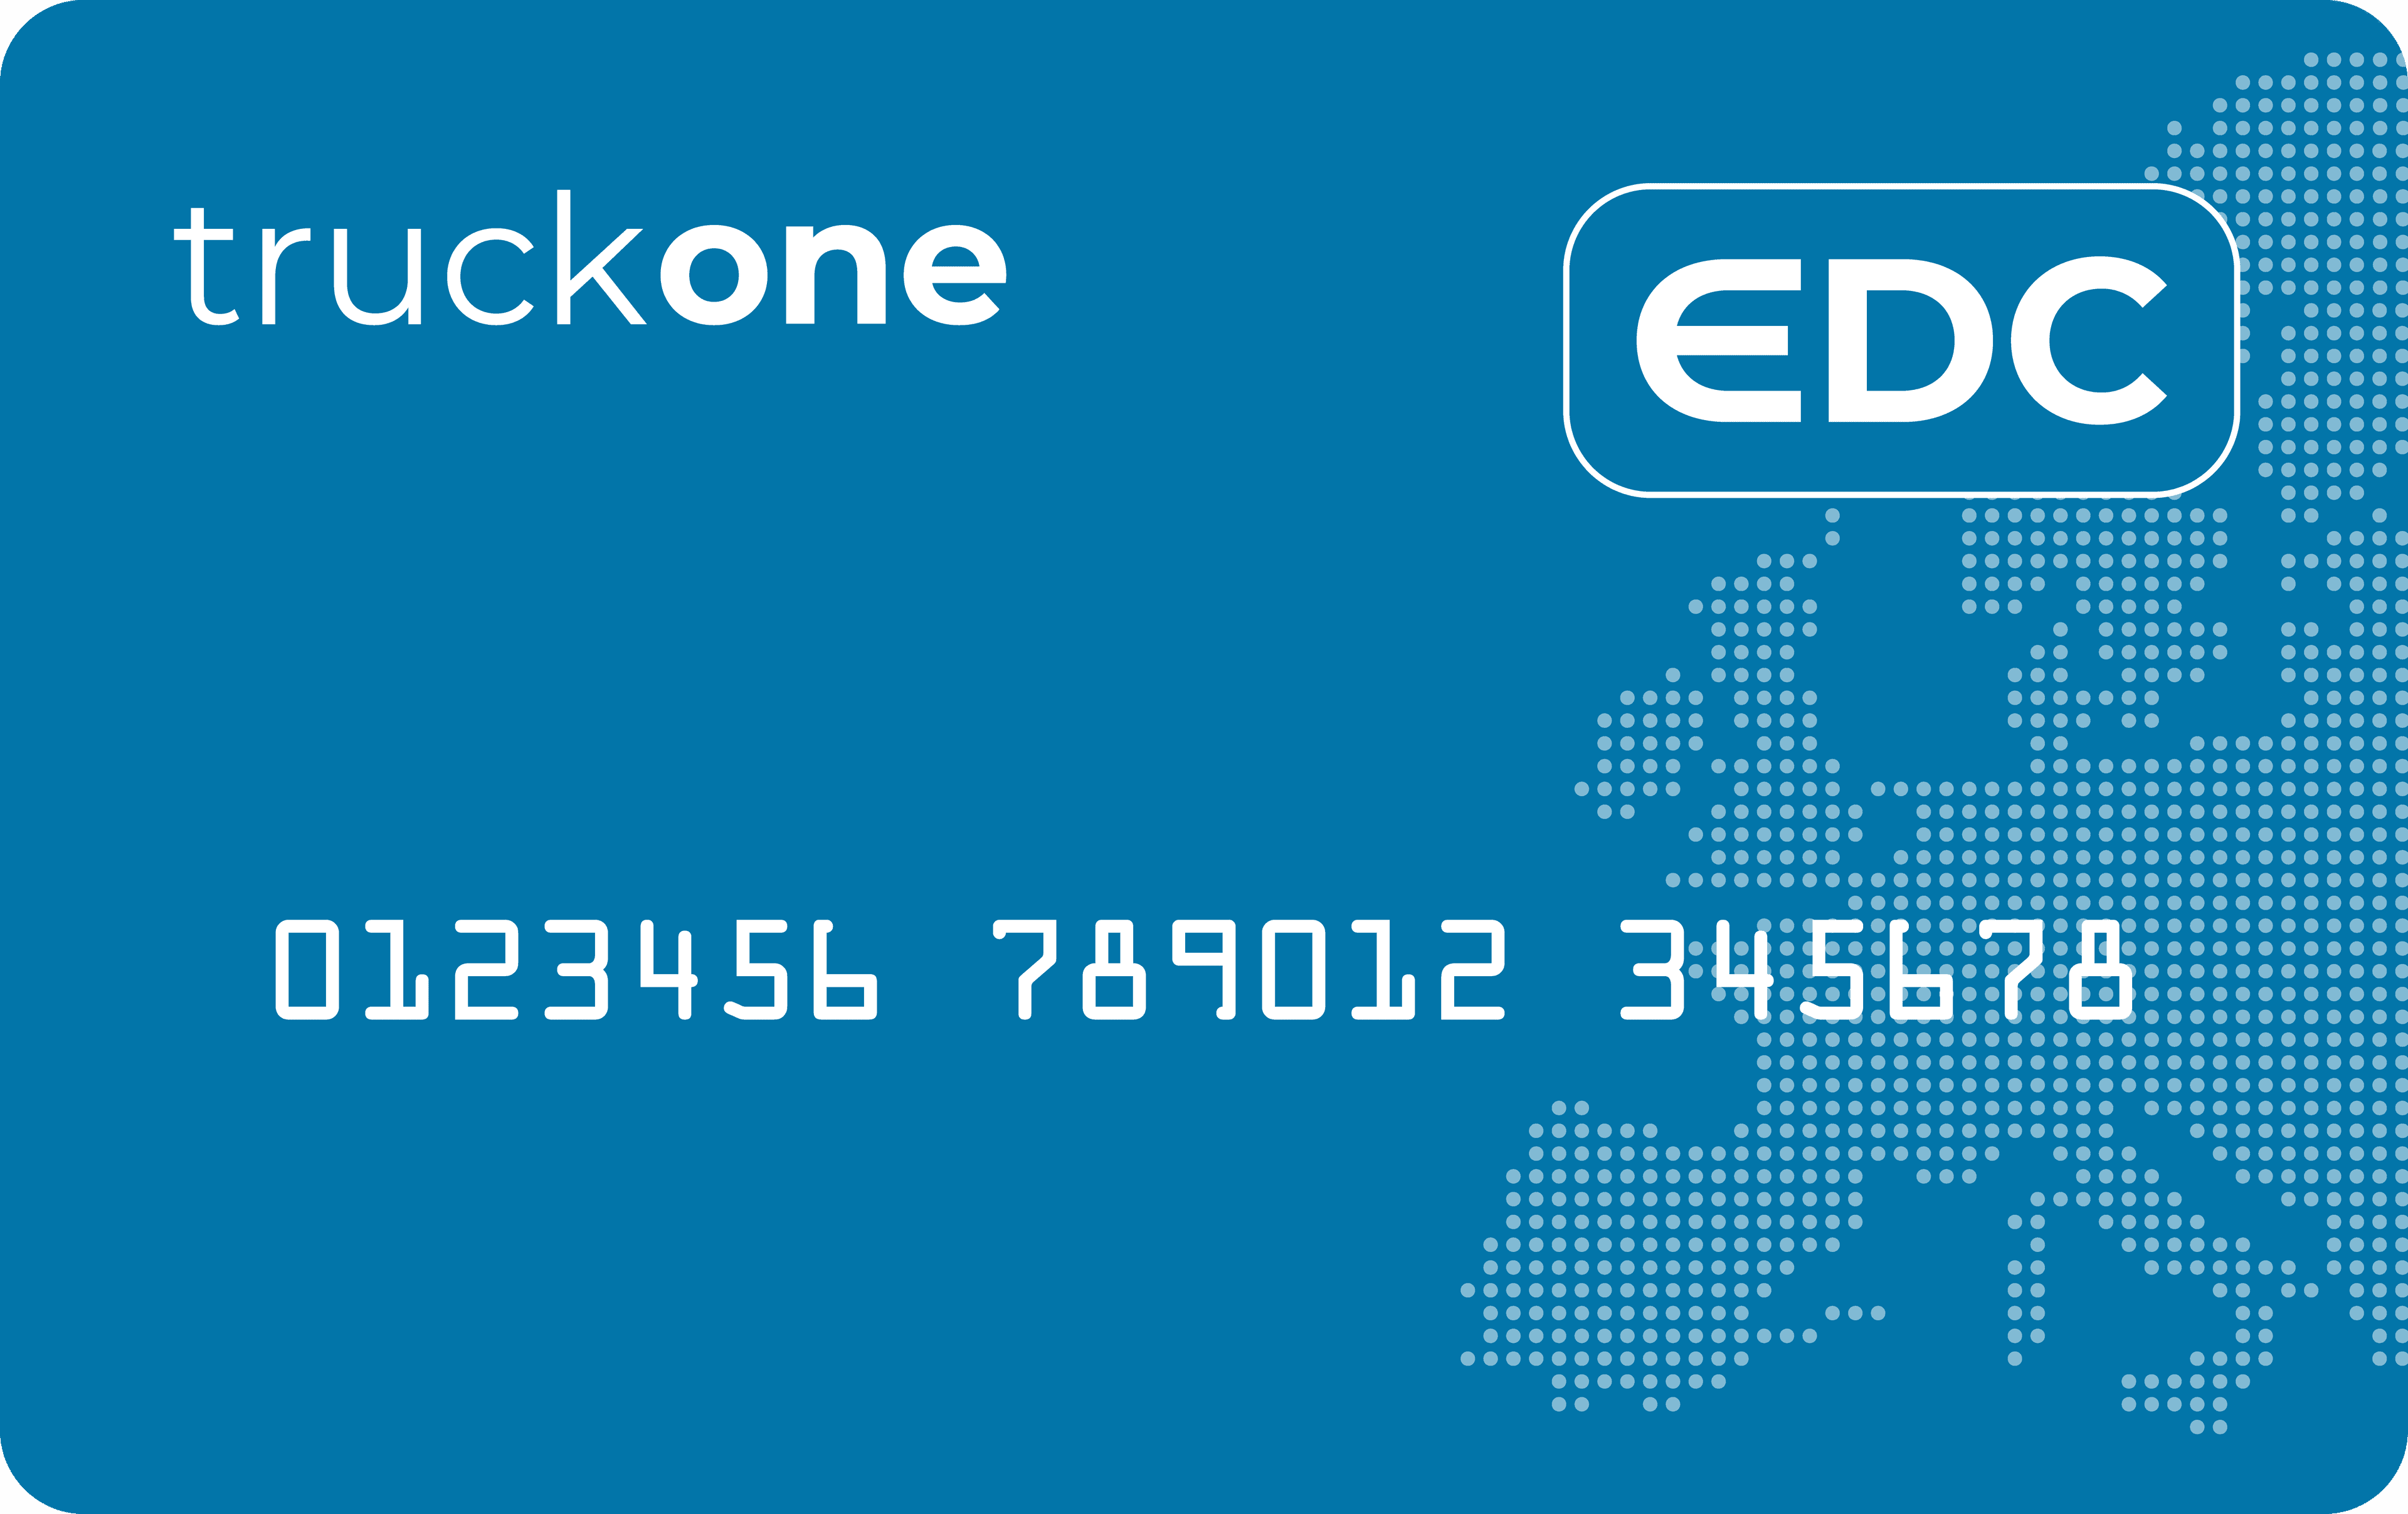 EDC fuel card